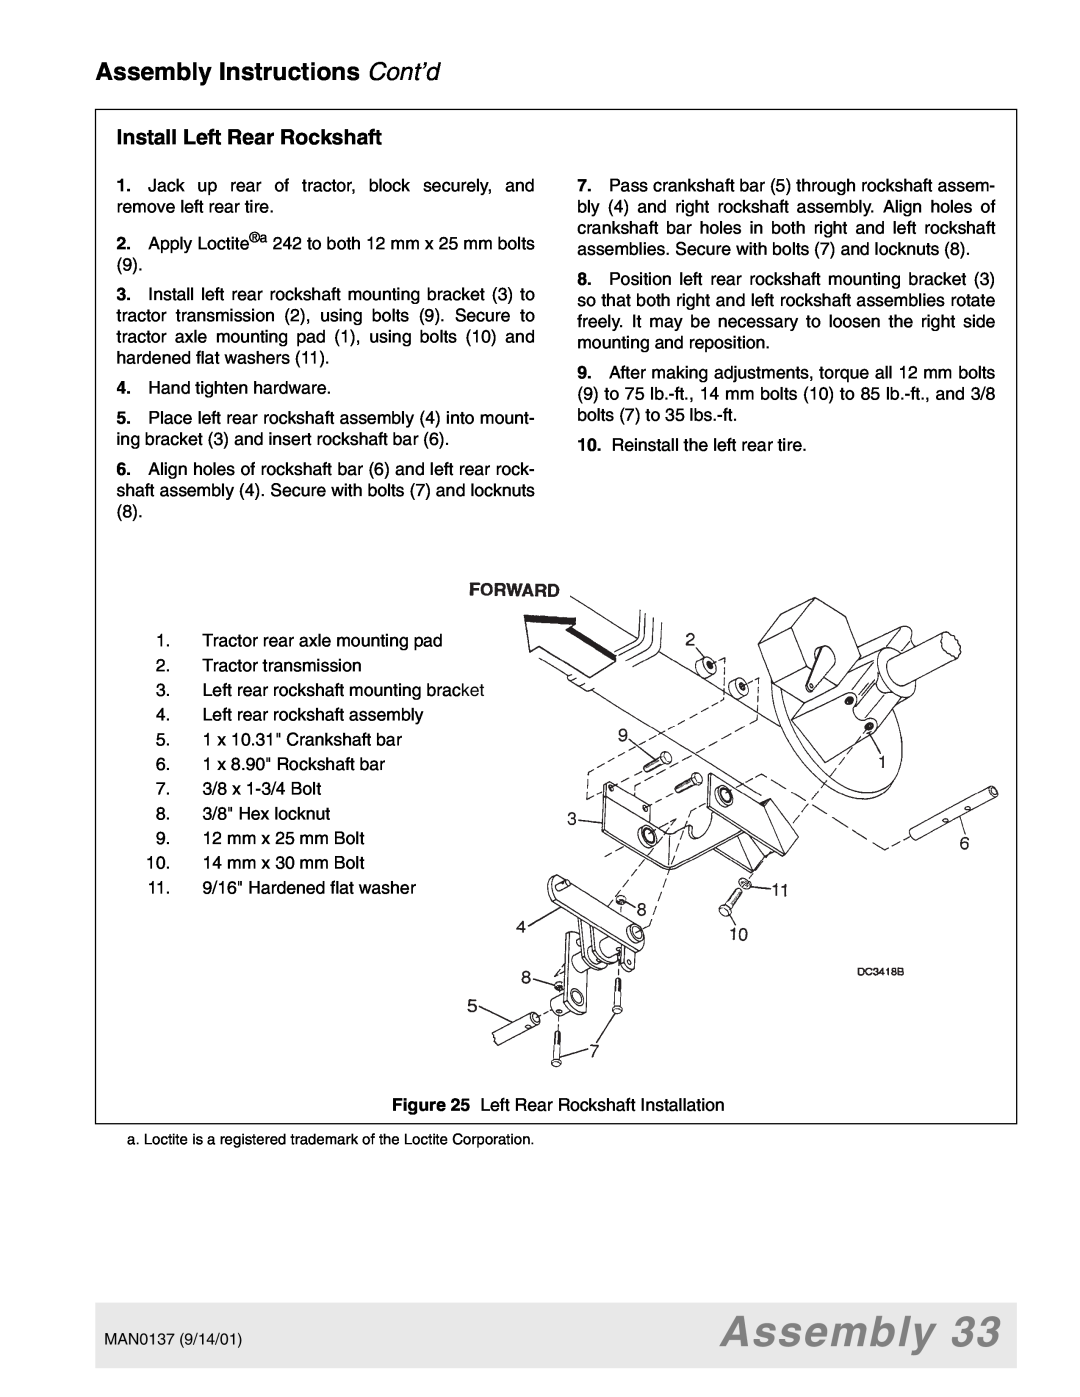 Woods Equipment 7000, 7192, 7194, 7195, 7200, 7205 manual Install Left Rear Rockshaft, Assembly Instructions Cont’d 